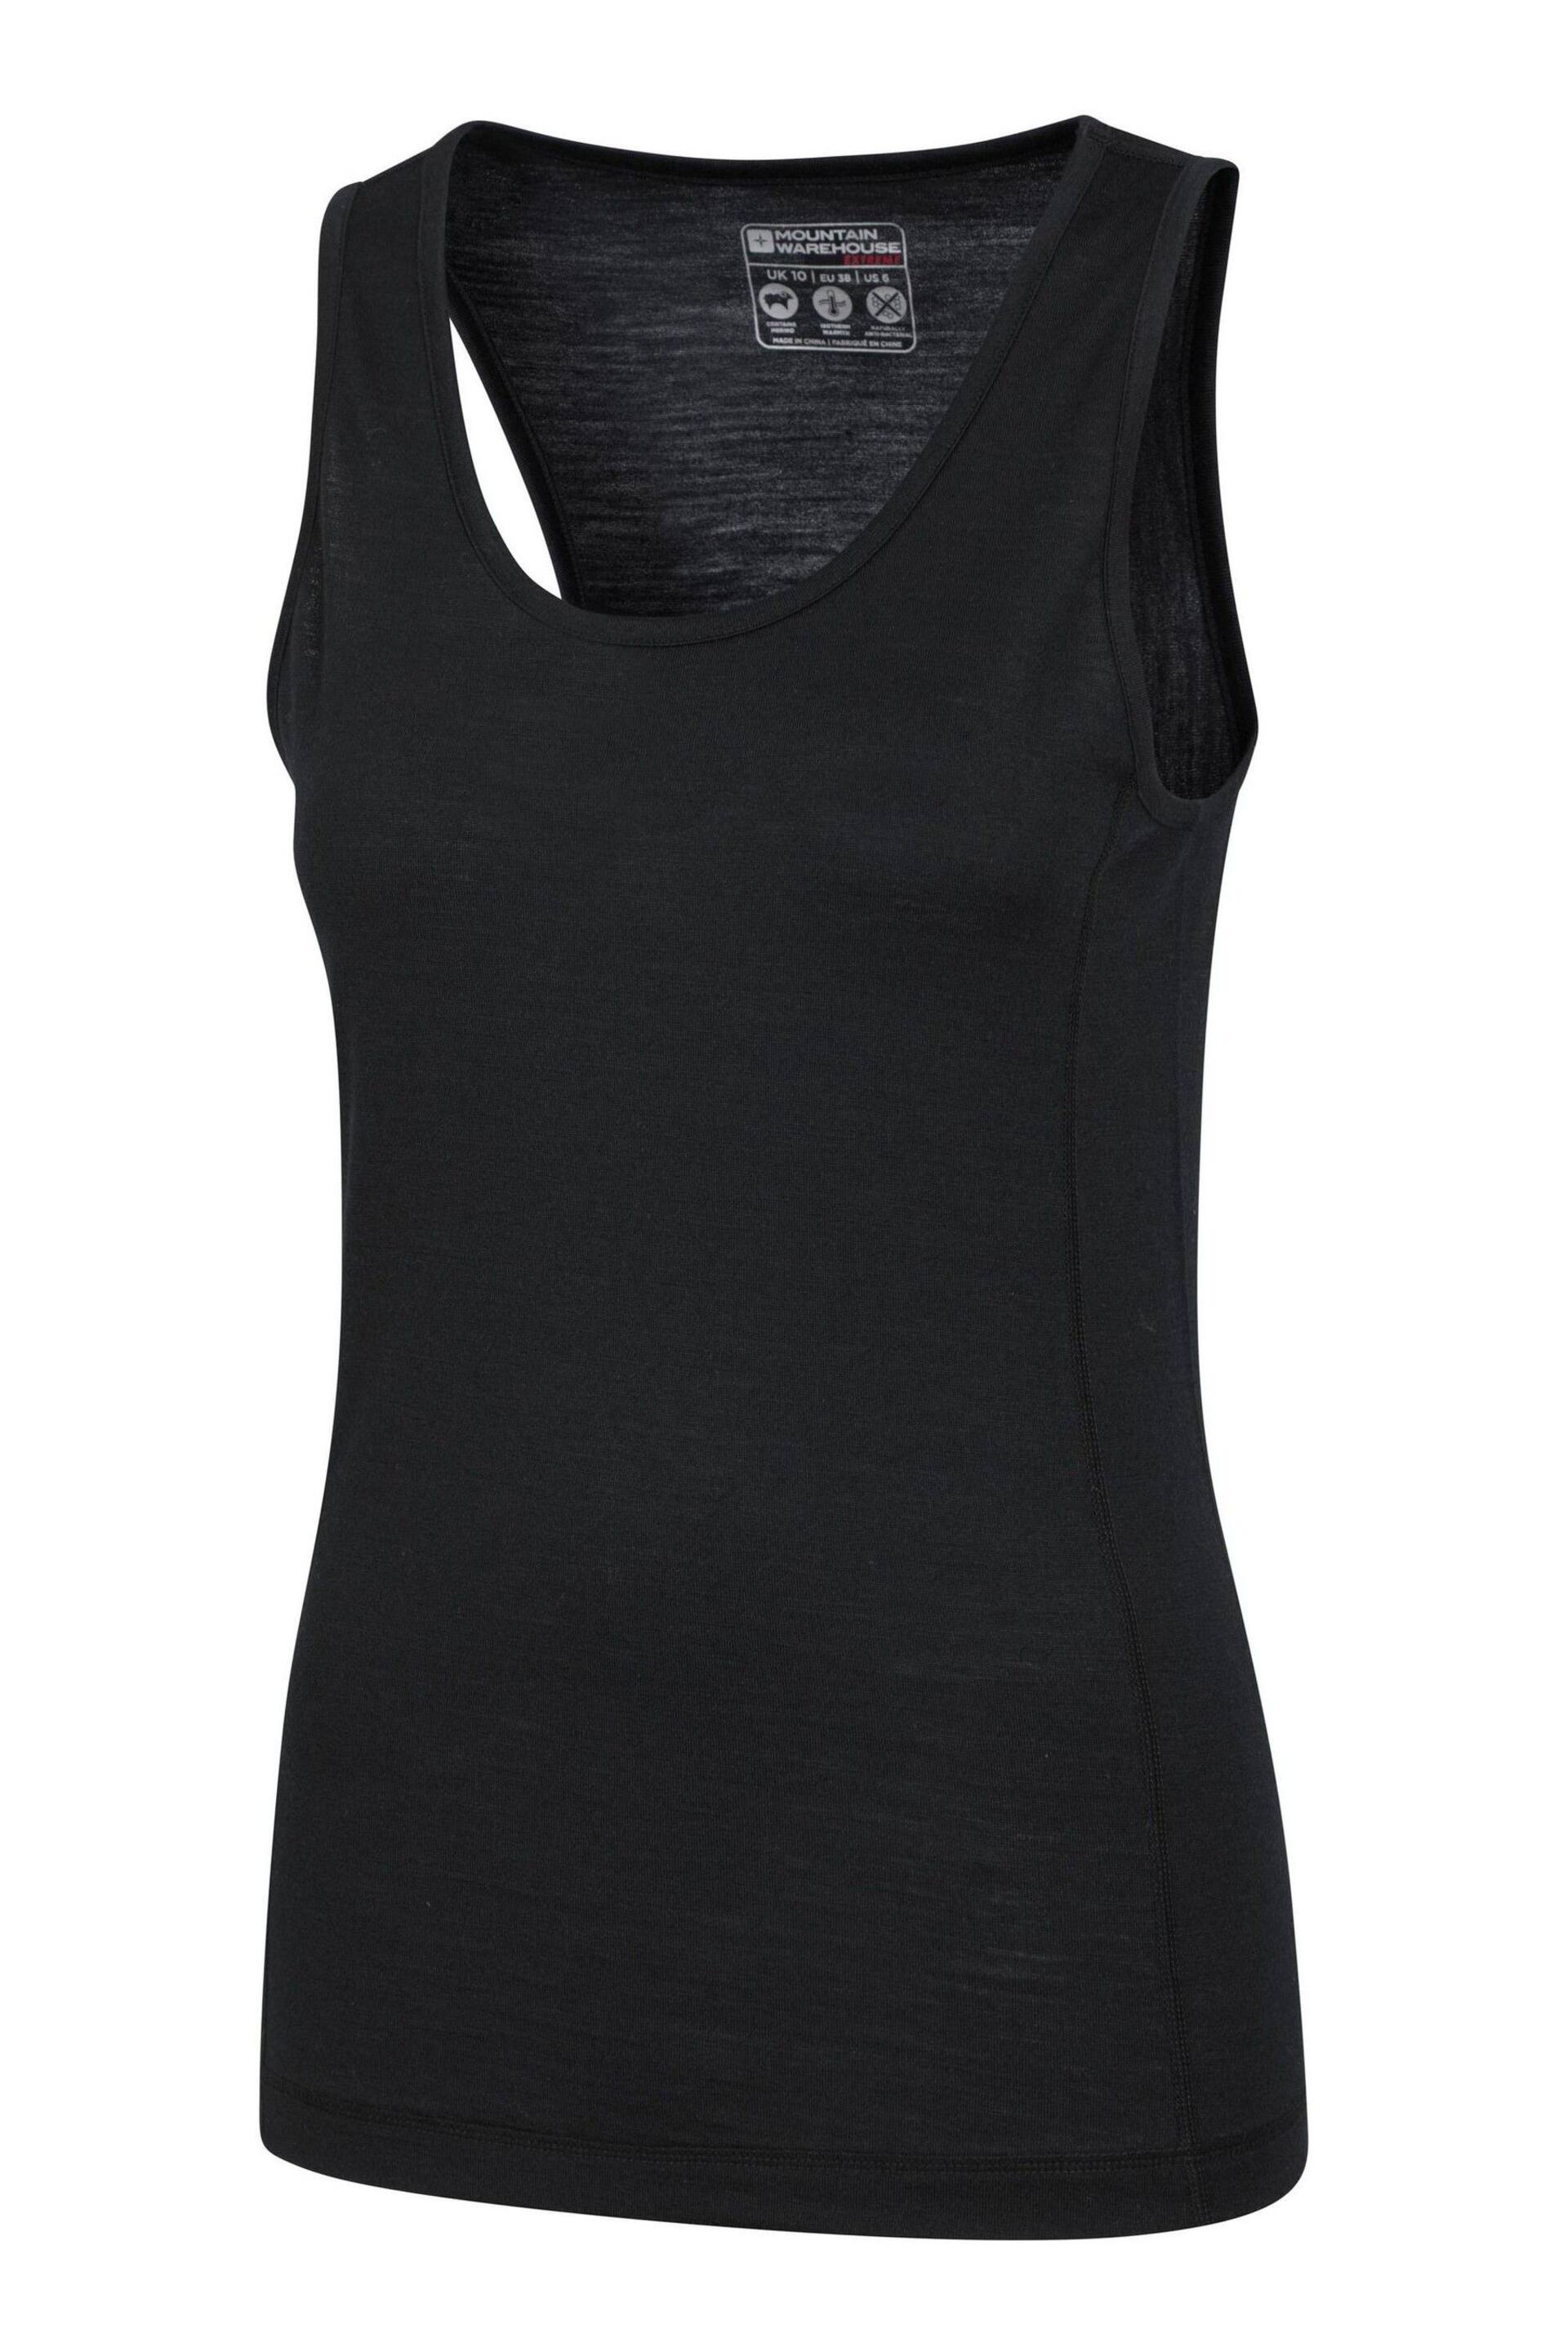 Mountain Warehouse Black Womens Merino Thermal Vest Top - Image 5 of 5